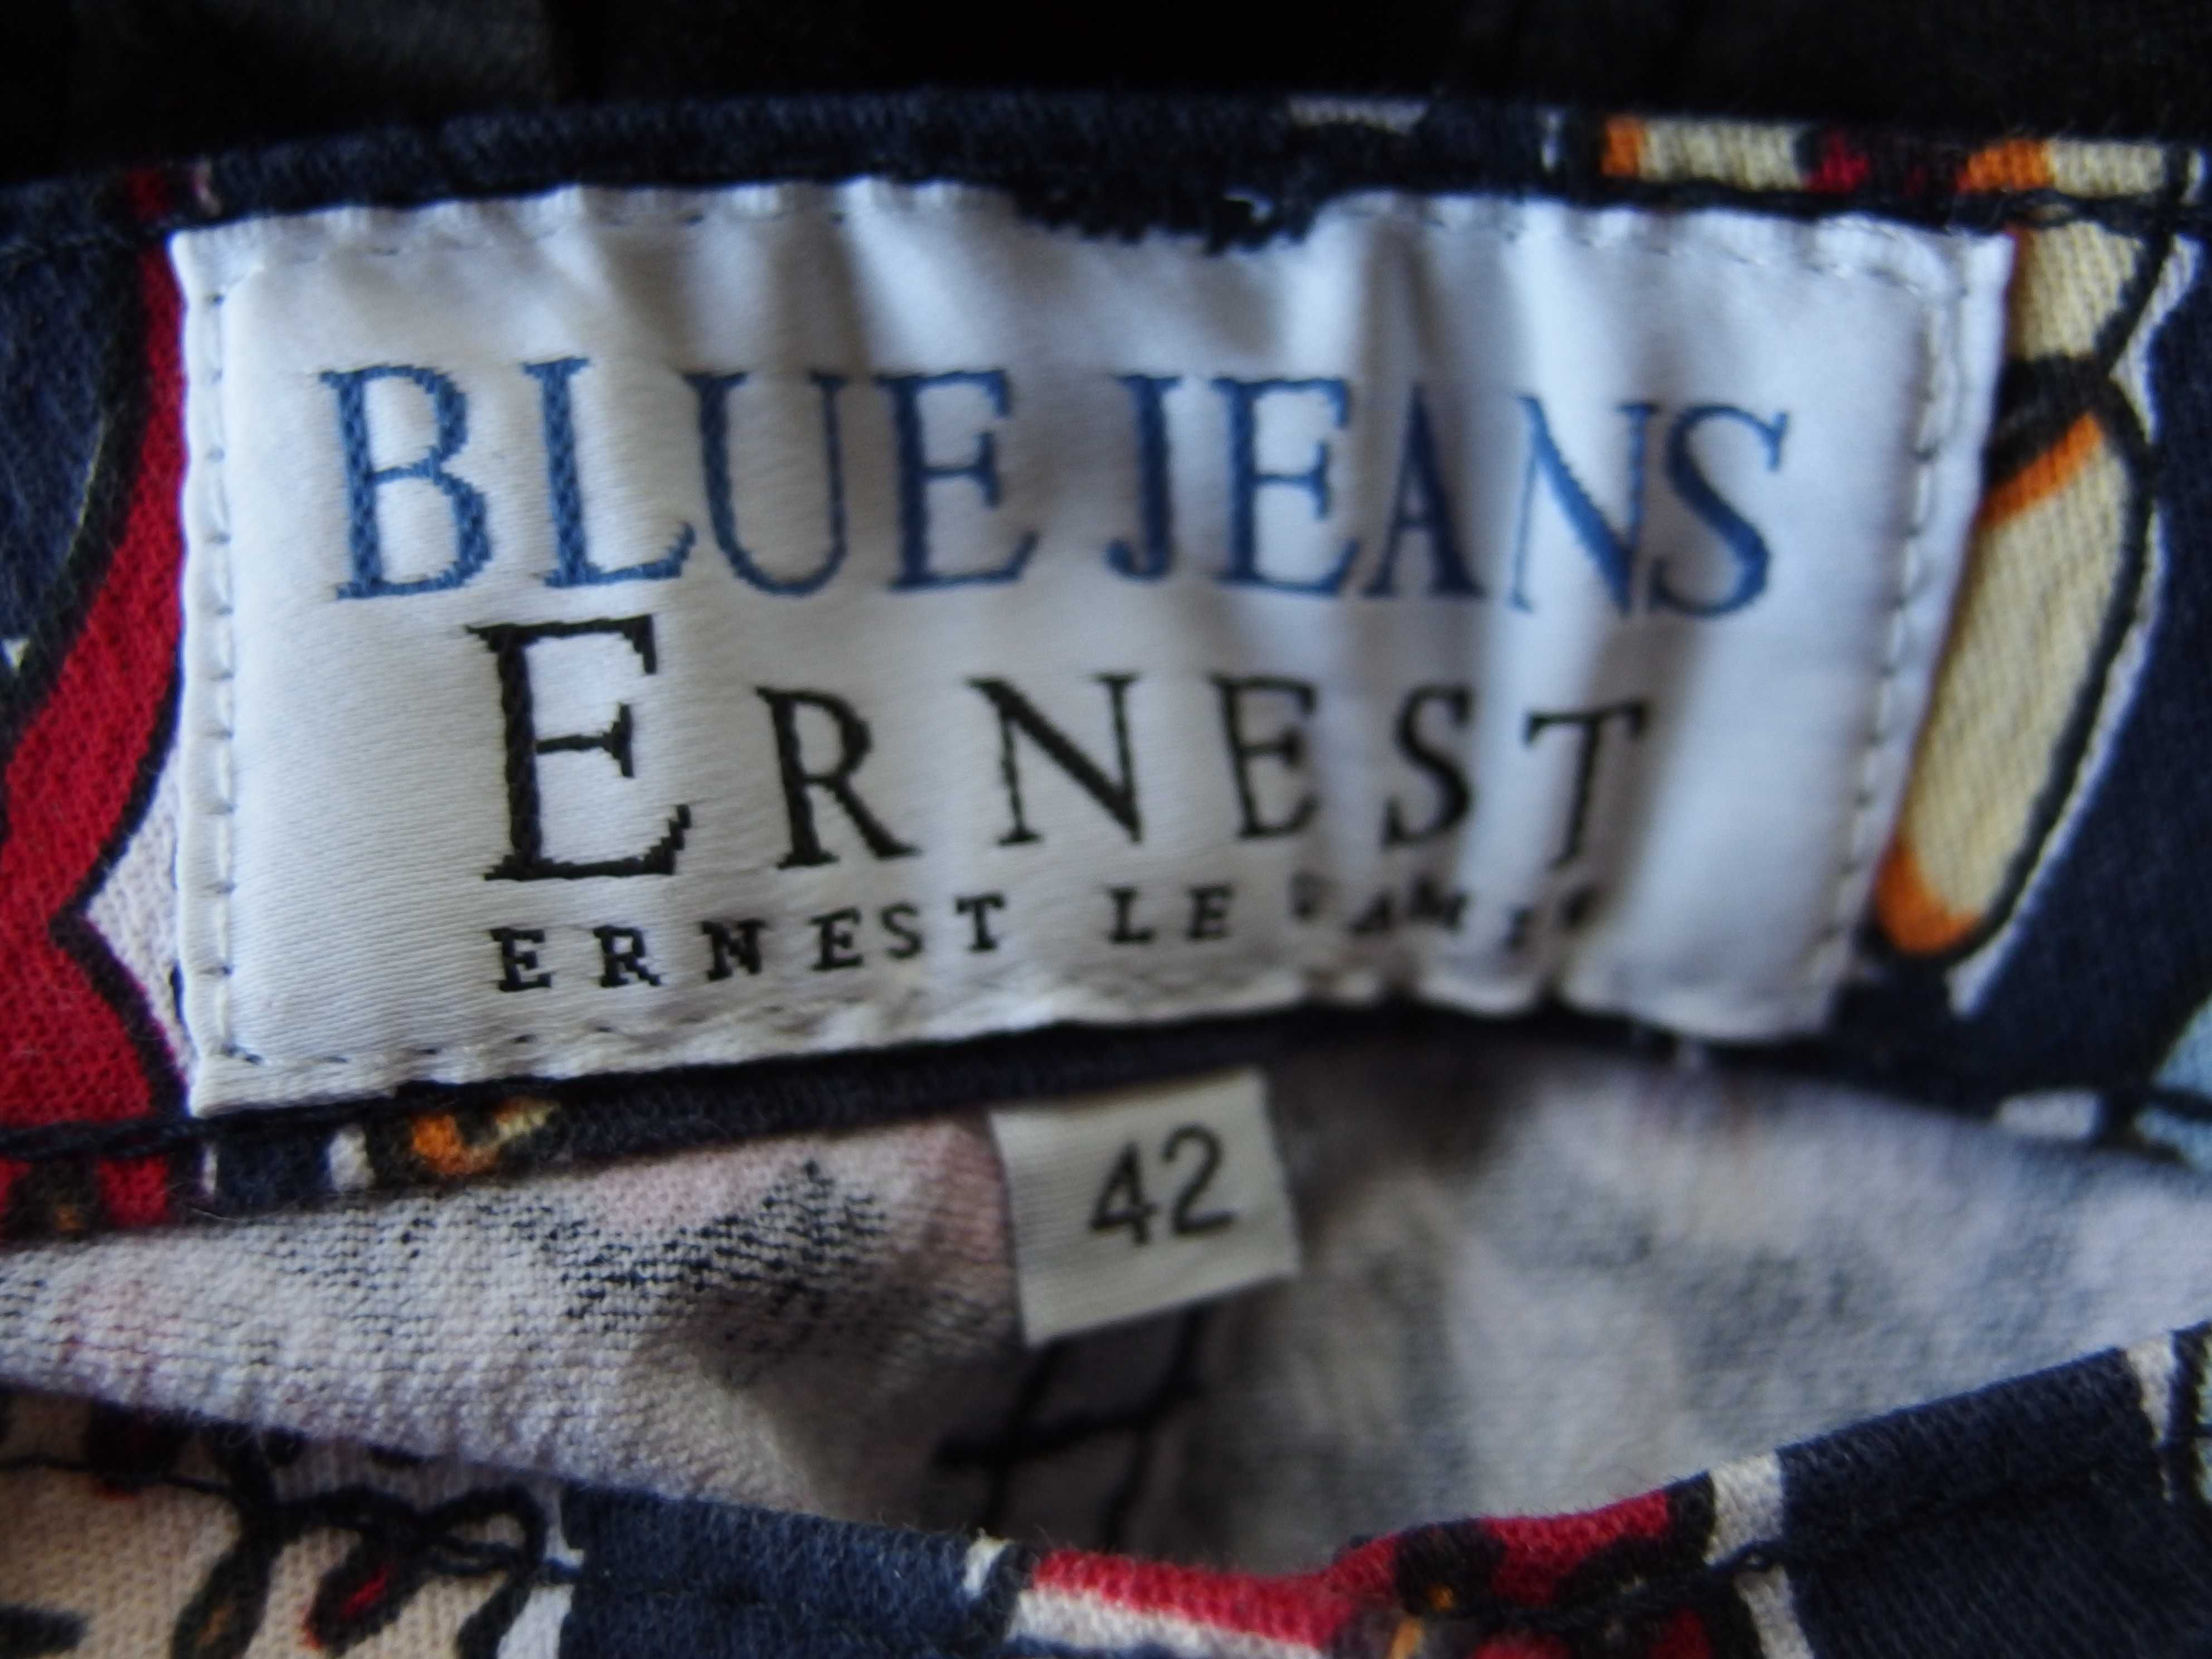 Spodnie. Francuski vintage.  Blue Jeans Ernest Le Gamin.